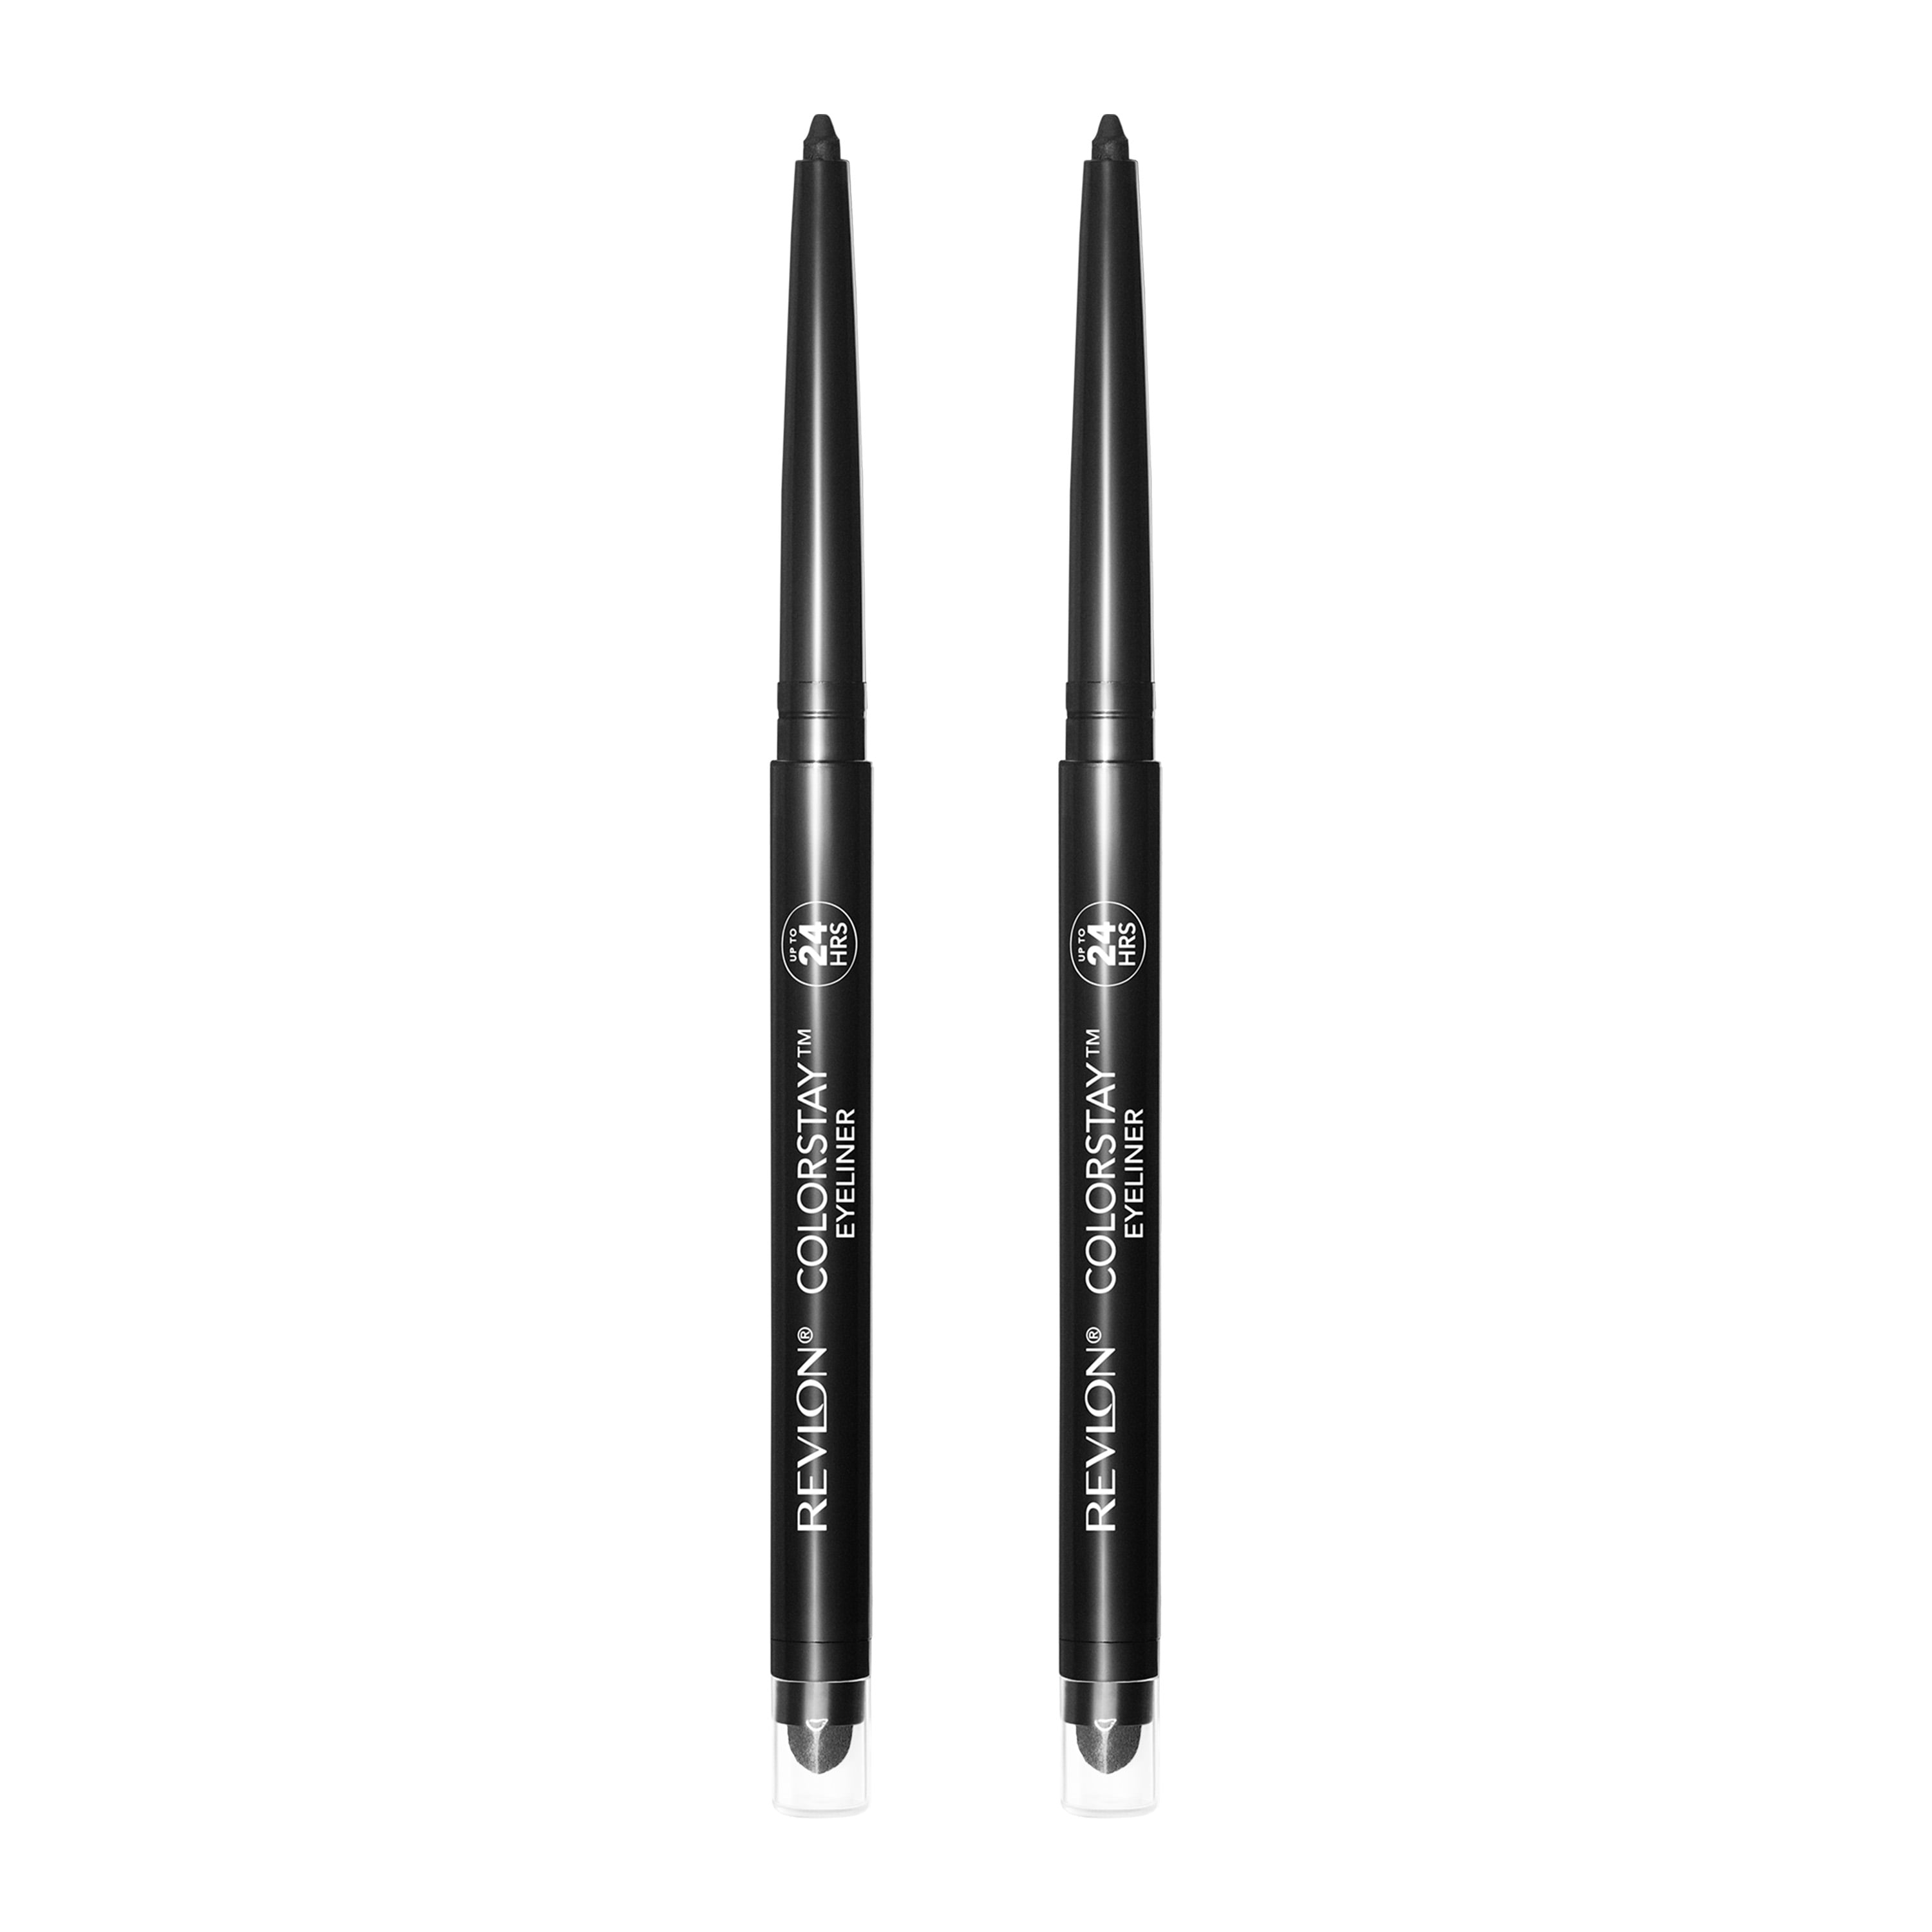 Revlon ColorStay Eyeliner Pencil, 201 Black, 2 Pack